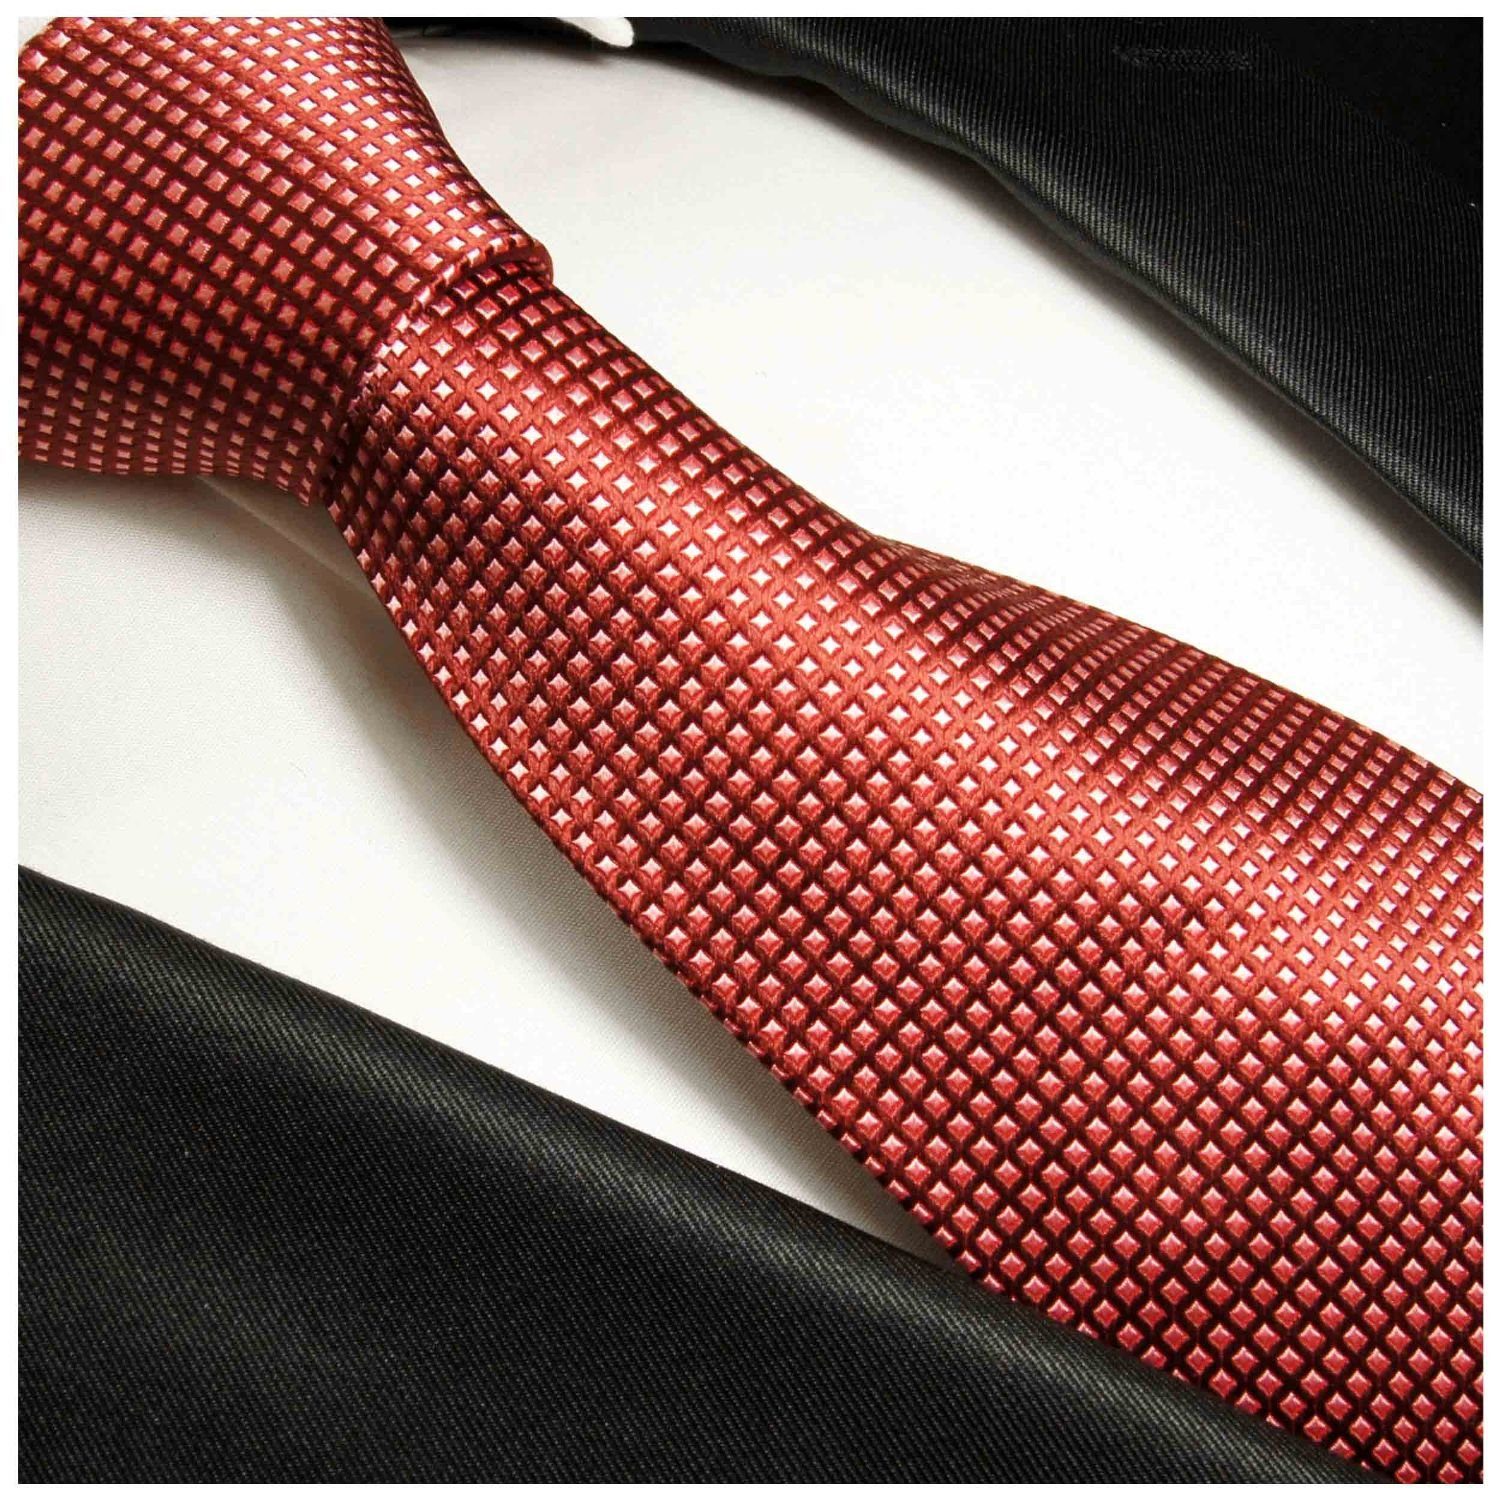 Herren Krawatten Paul Malone Krawatte Designer Seidenkrawatte Herren Schlips modern gepunktet 100% Seide Schmal (6cm), rot pink 